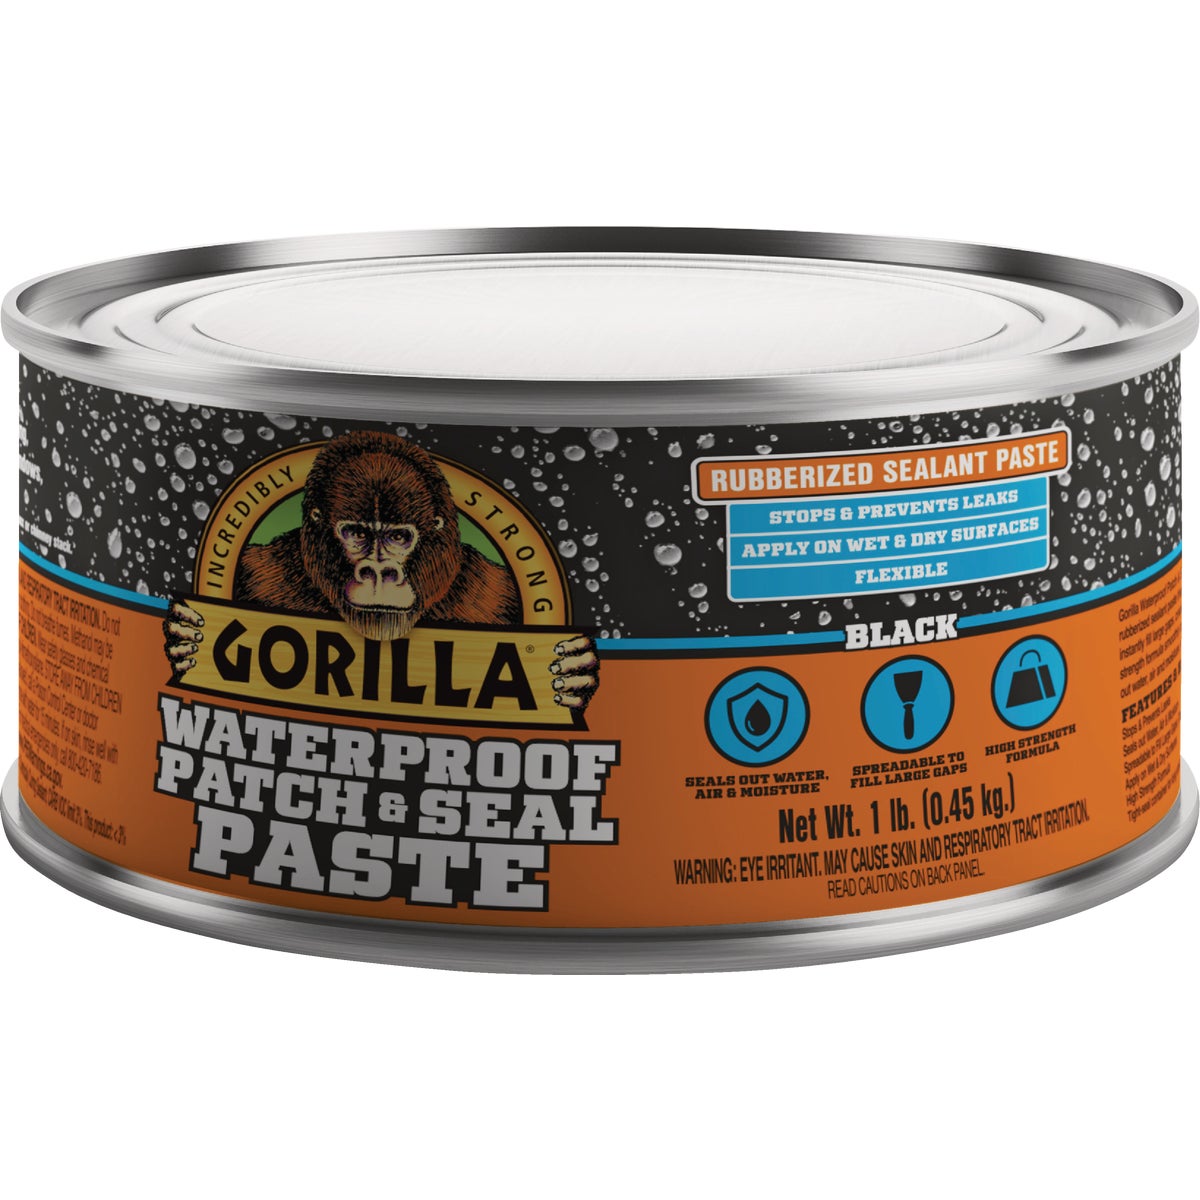 Gorilla 1 Lb. Black Waterproof Patch & Seal Paste